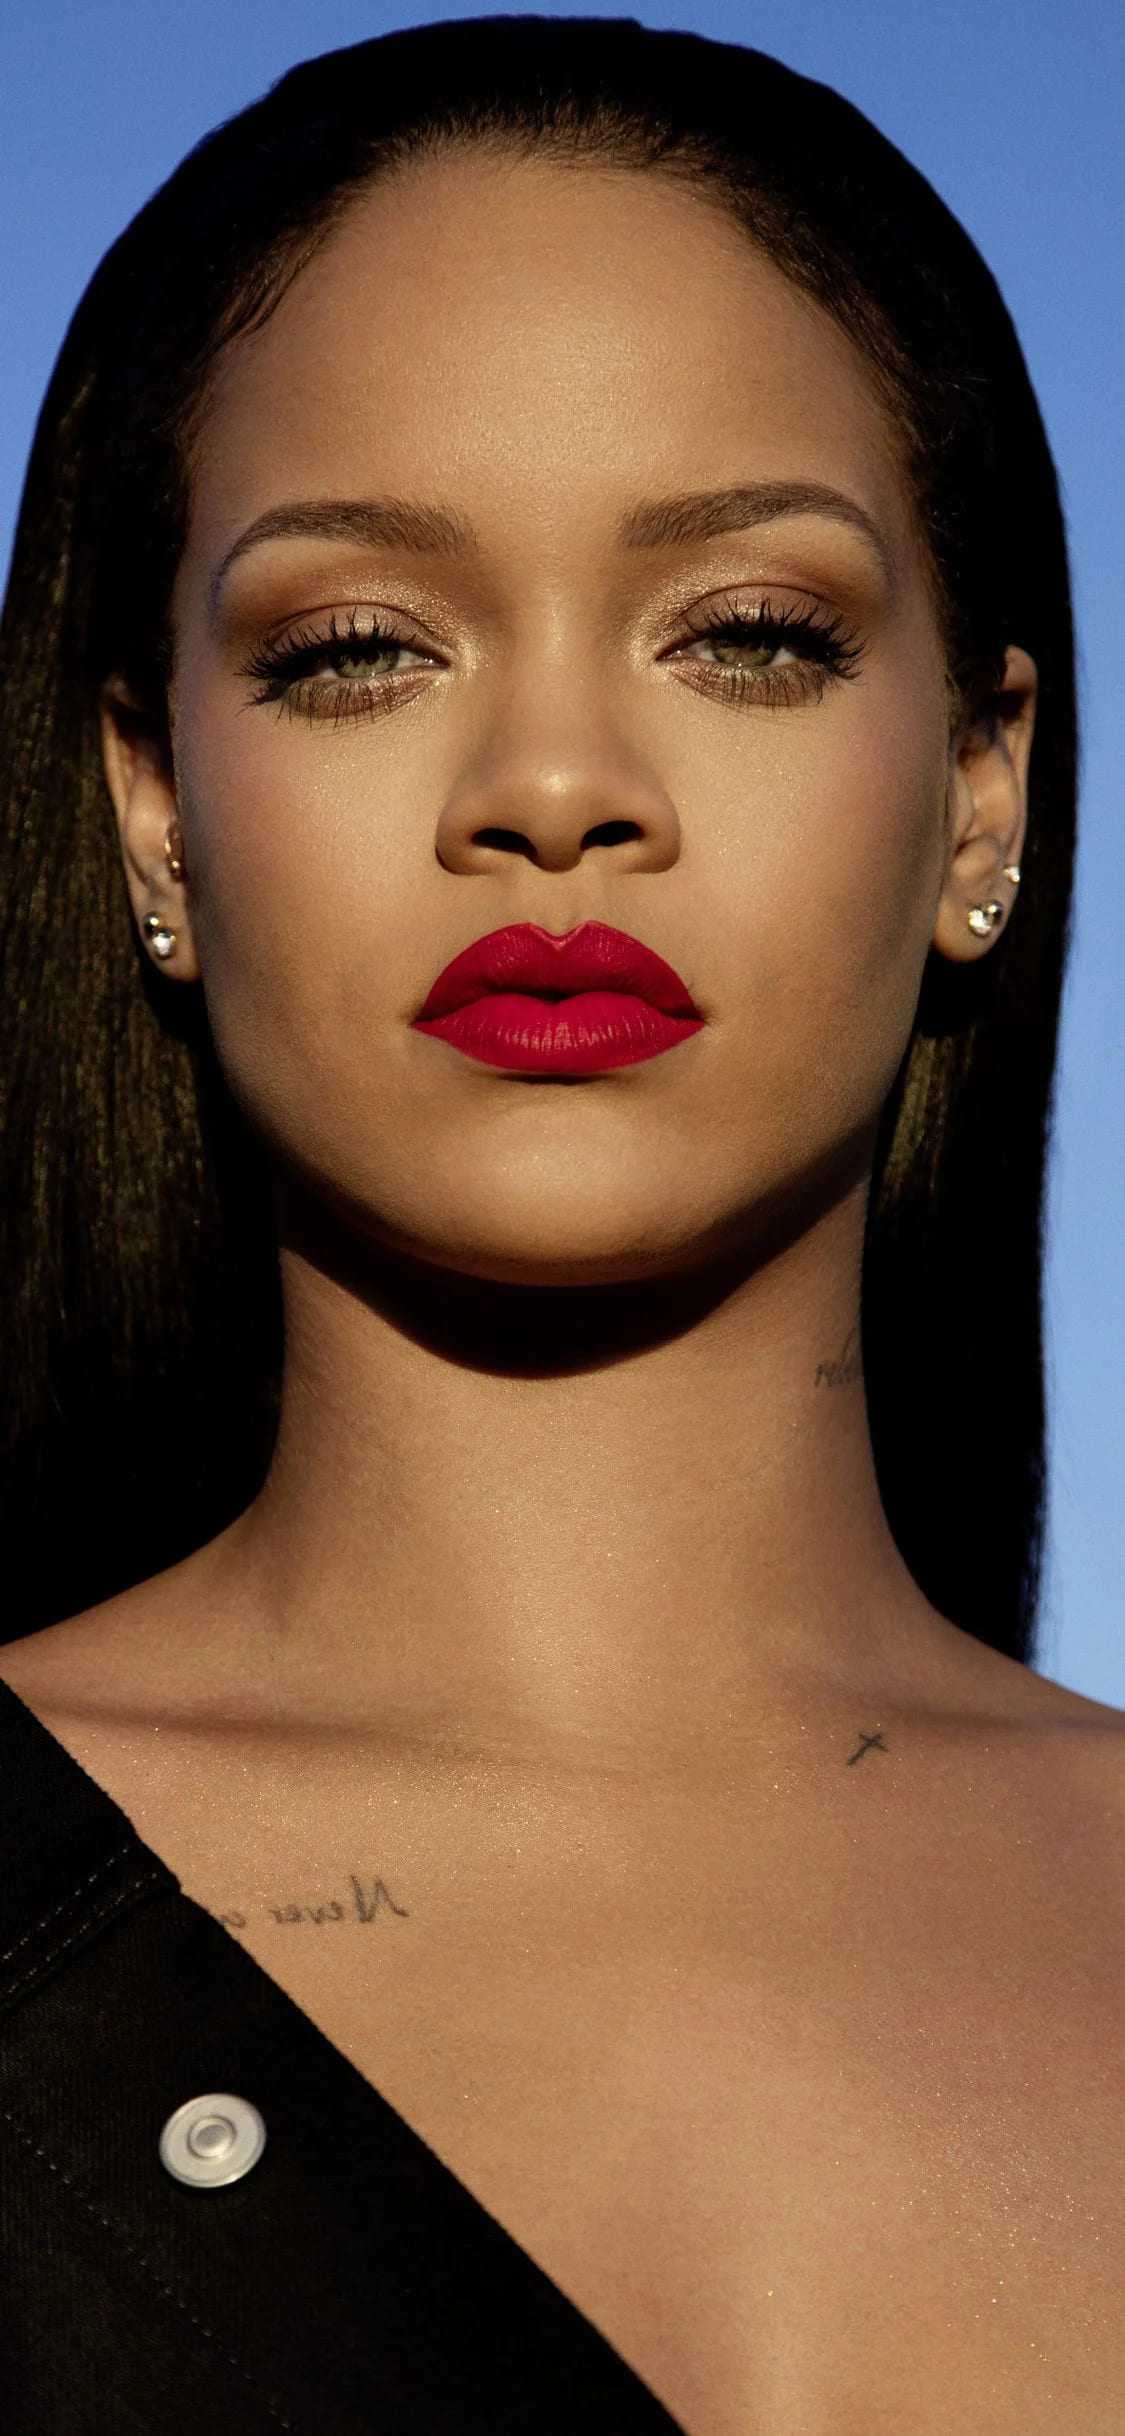 Lovely Rihanna Wallpaper - Rihanna Wallpaper (26513680) - Fanpop